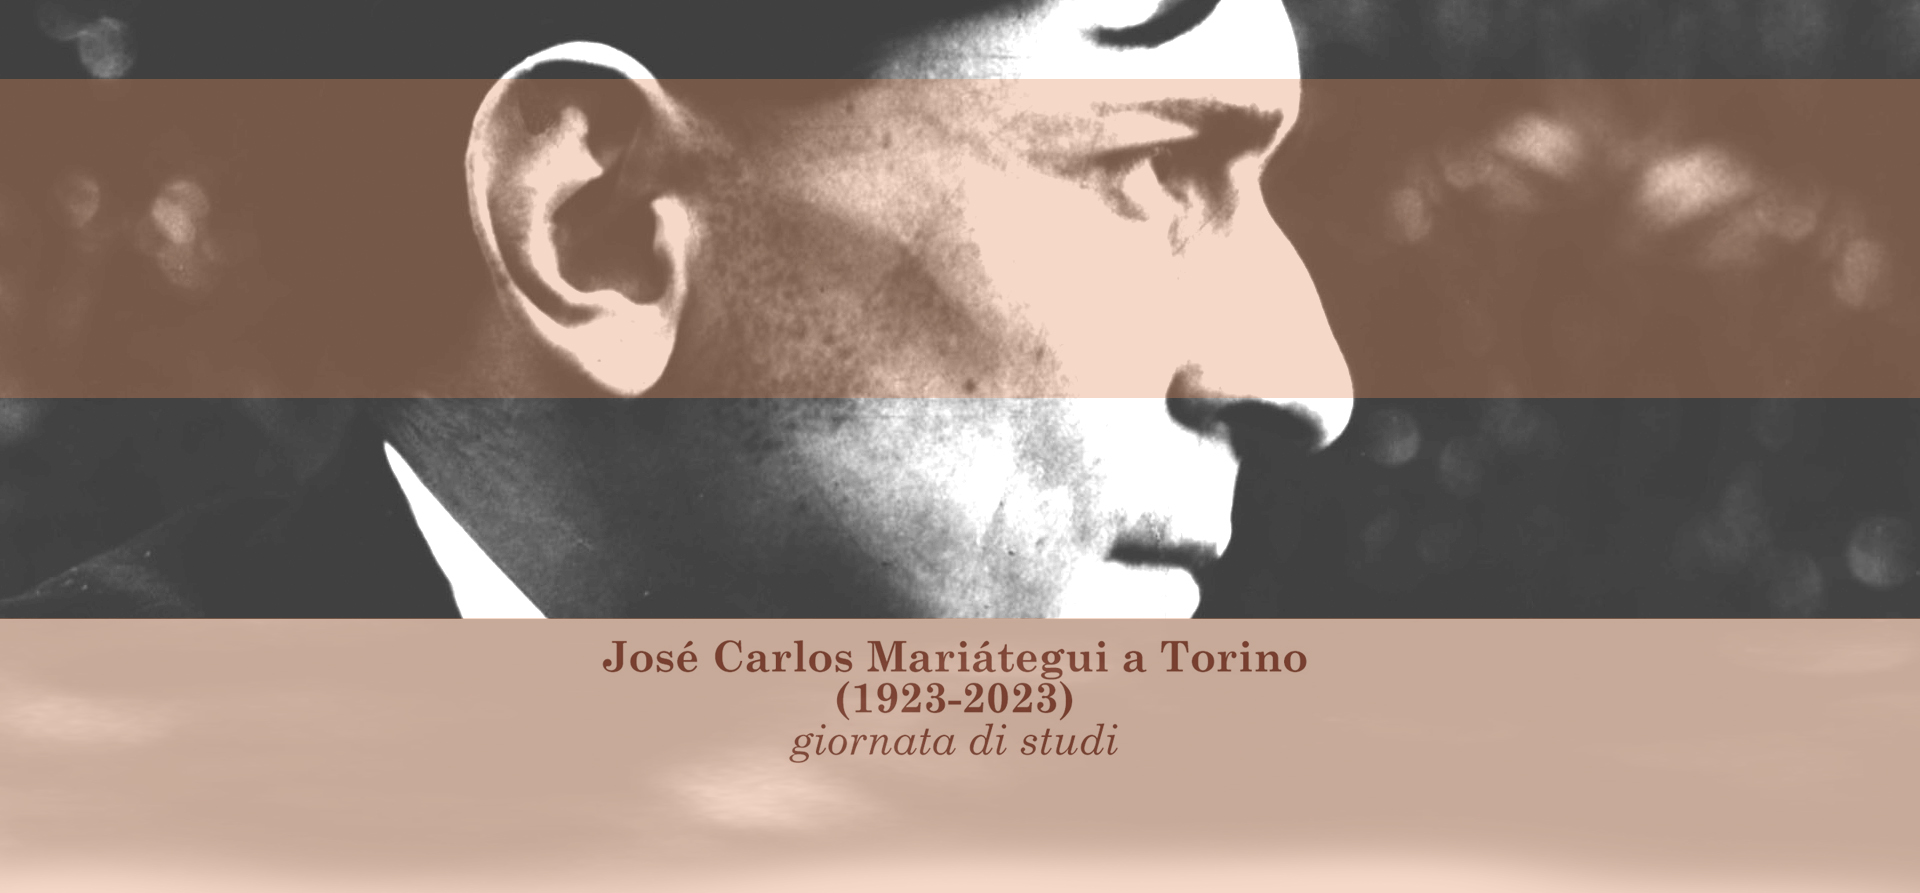 JOSÉ CARLOS MARIÁTEGUI A TORINO (1923-2023)